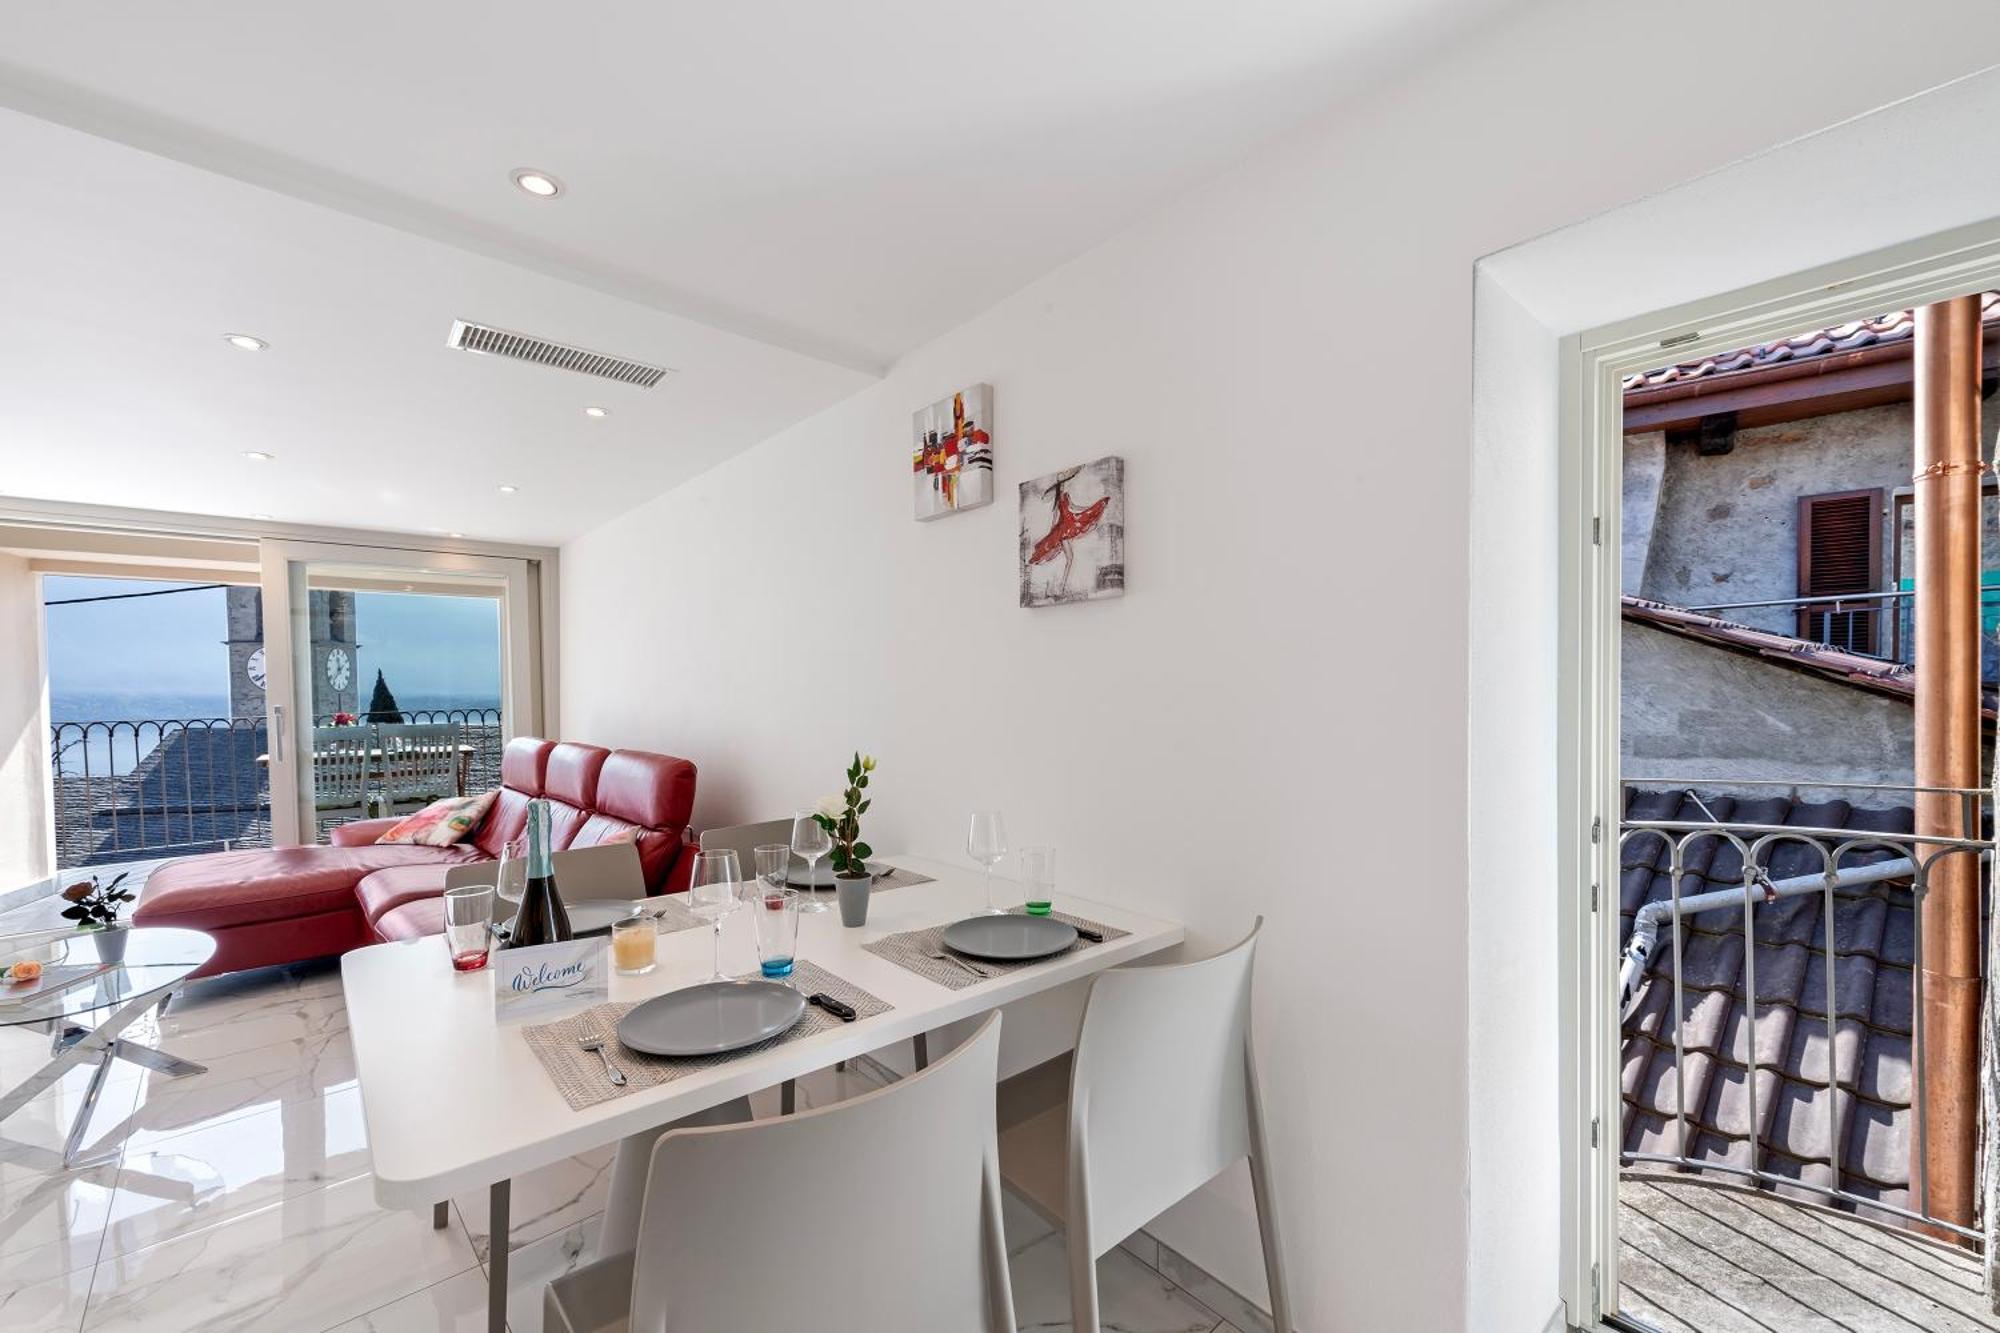 Red View Apartment - Happy Rentals Ronco sopra Ascona Exterior photo